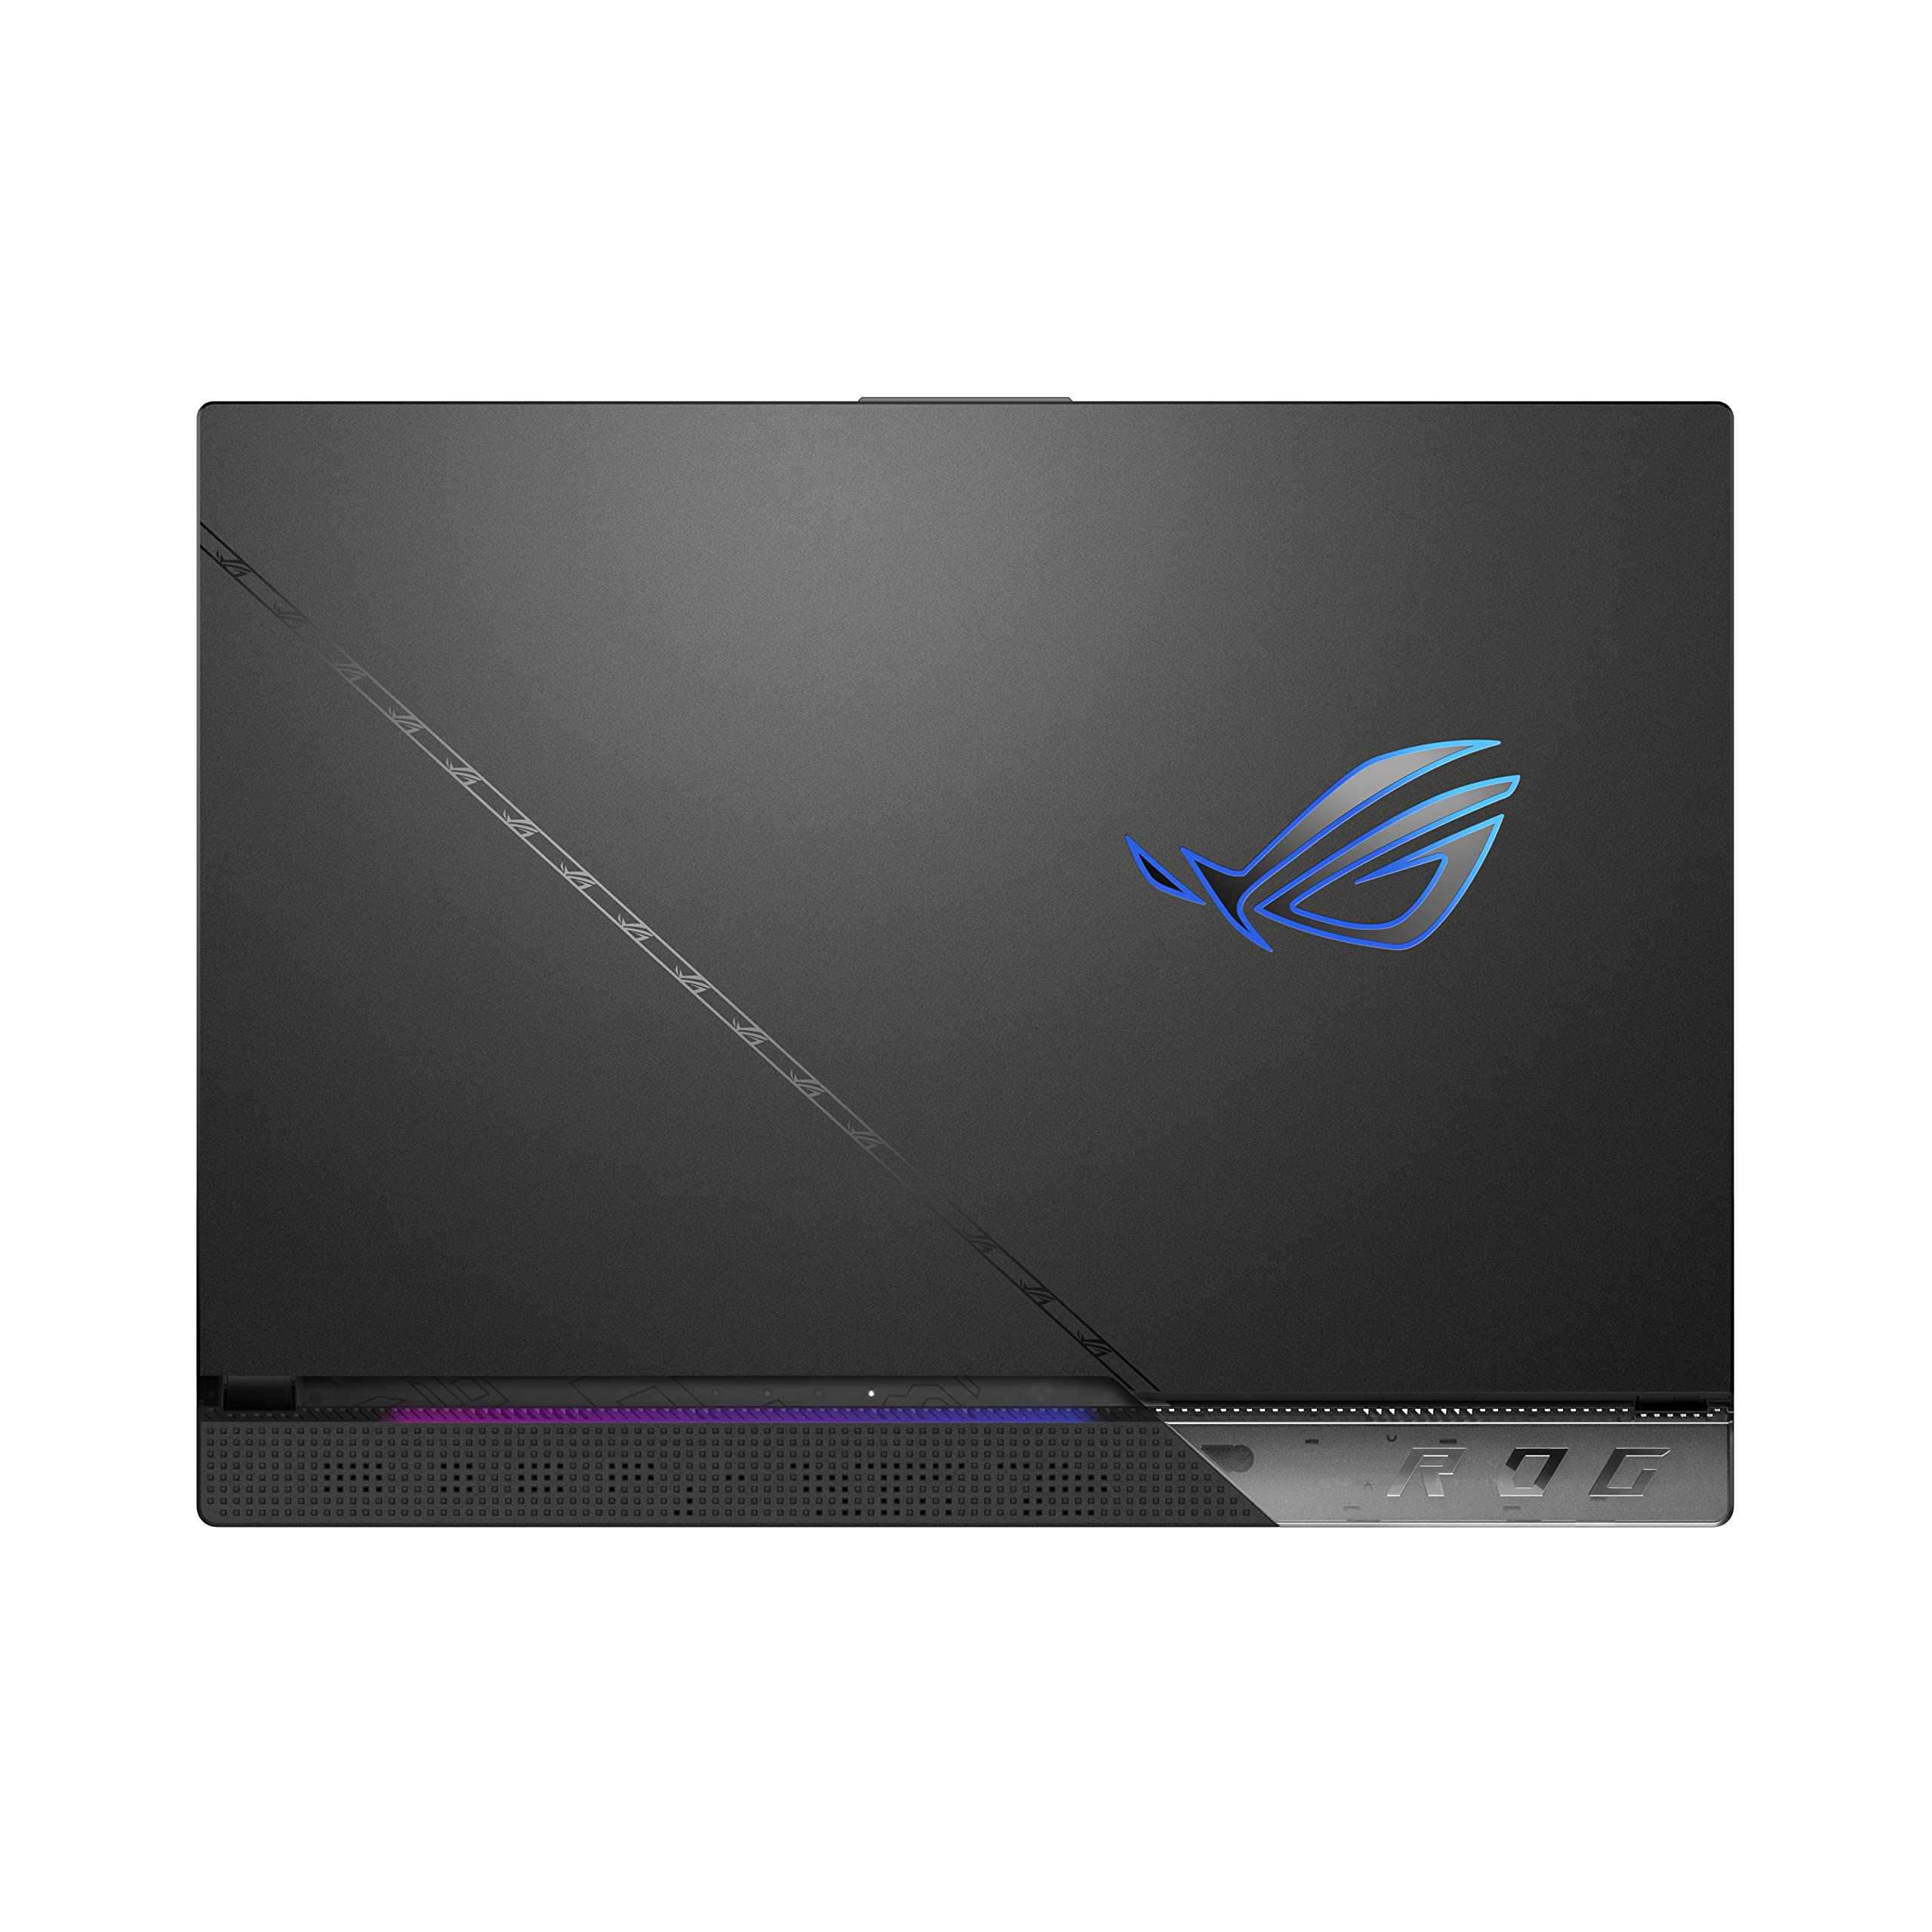 ASUS ROG Strix Scar 15 Gaming Laptop, 15.6” 240Hz IPS QHD Display, NVIDIA GeForce RTX 3070 Ti, Intel Core i9 12900H, 16GB DDR5, 1TB SSD, Per-Key RGB Keyboard, Windows 11 Home, G533ZW-AS94Q,Black